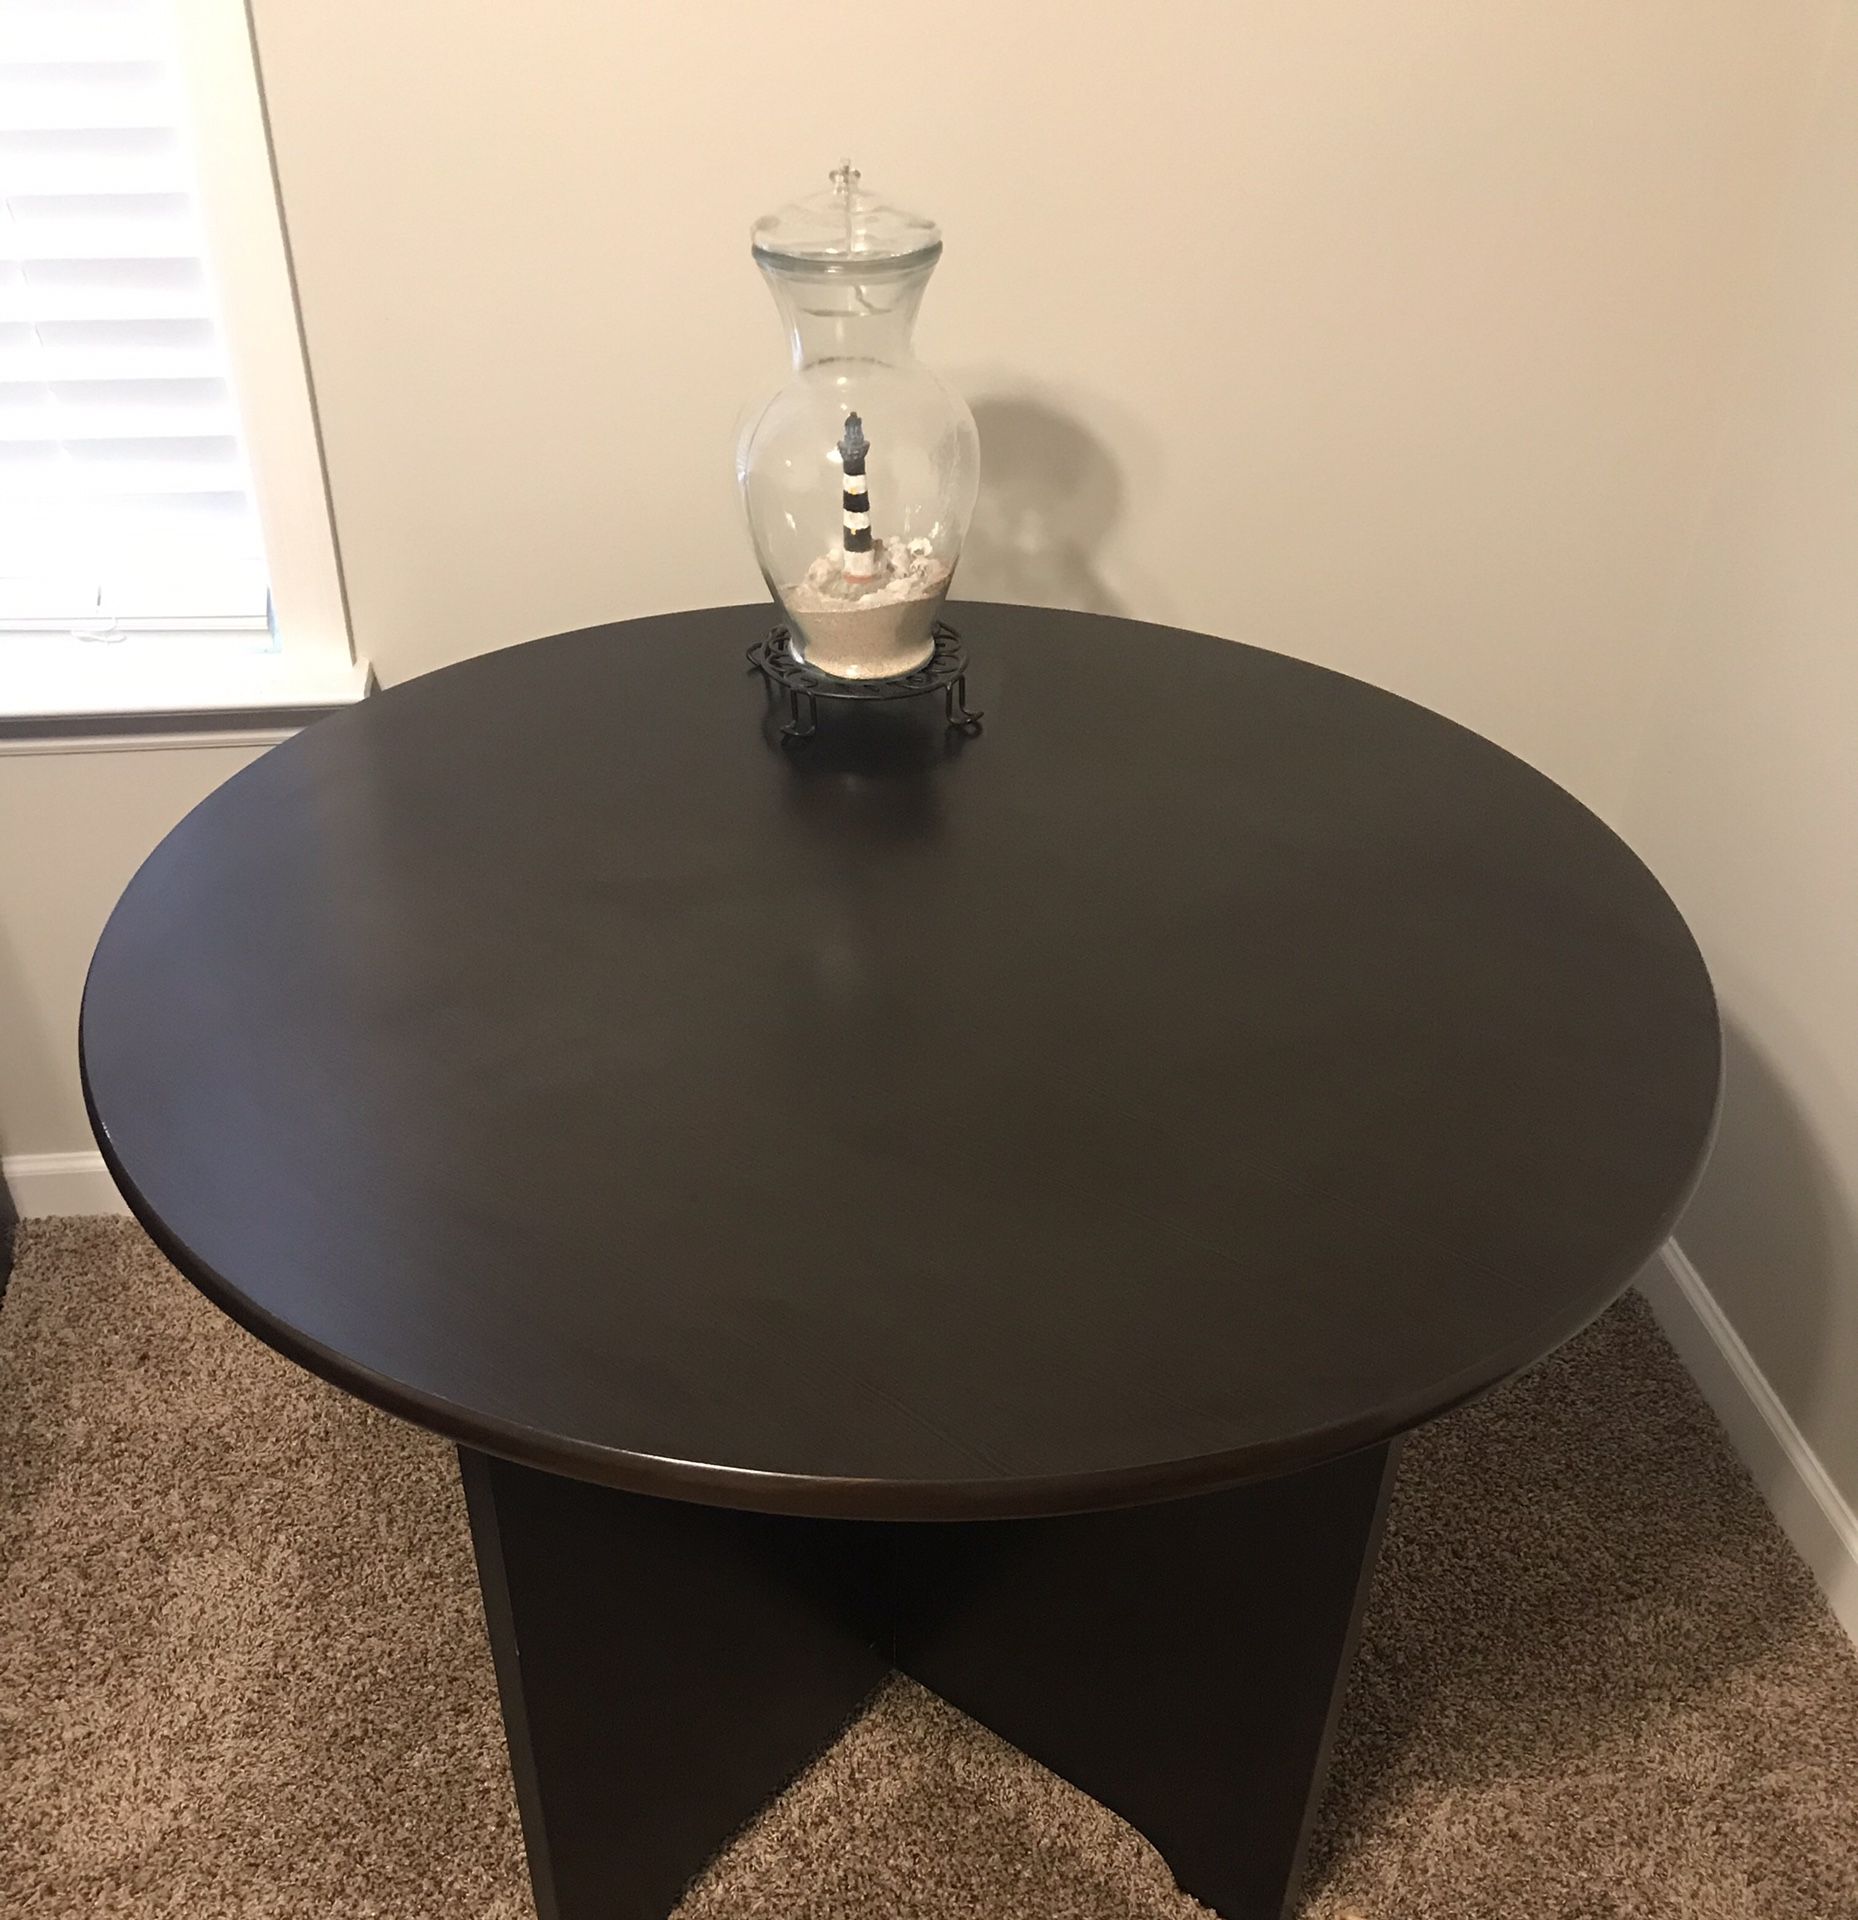 38” Espresso finish round wood table